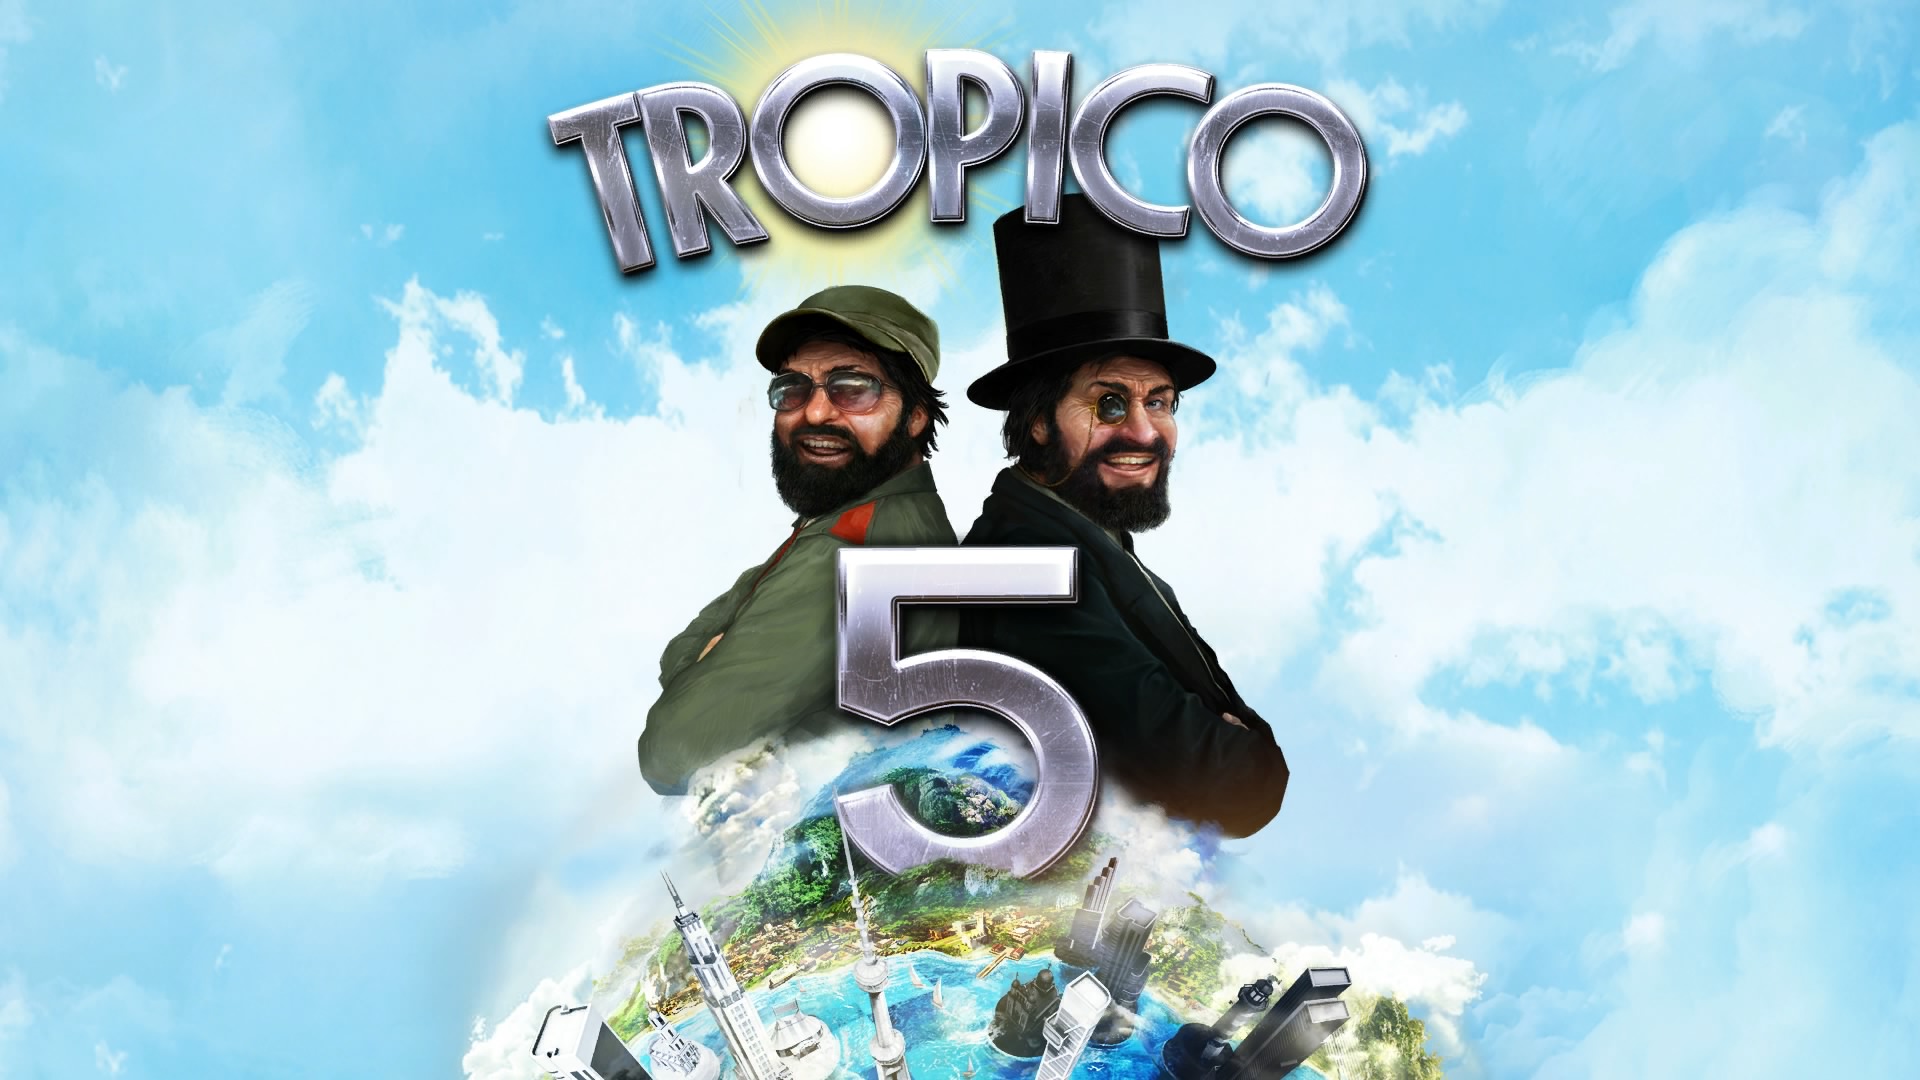 Amazoncom: Tropico 4: Gold Edition Mac Download